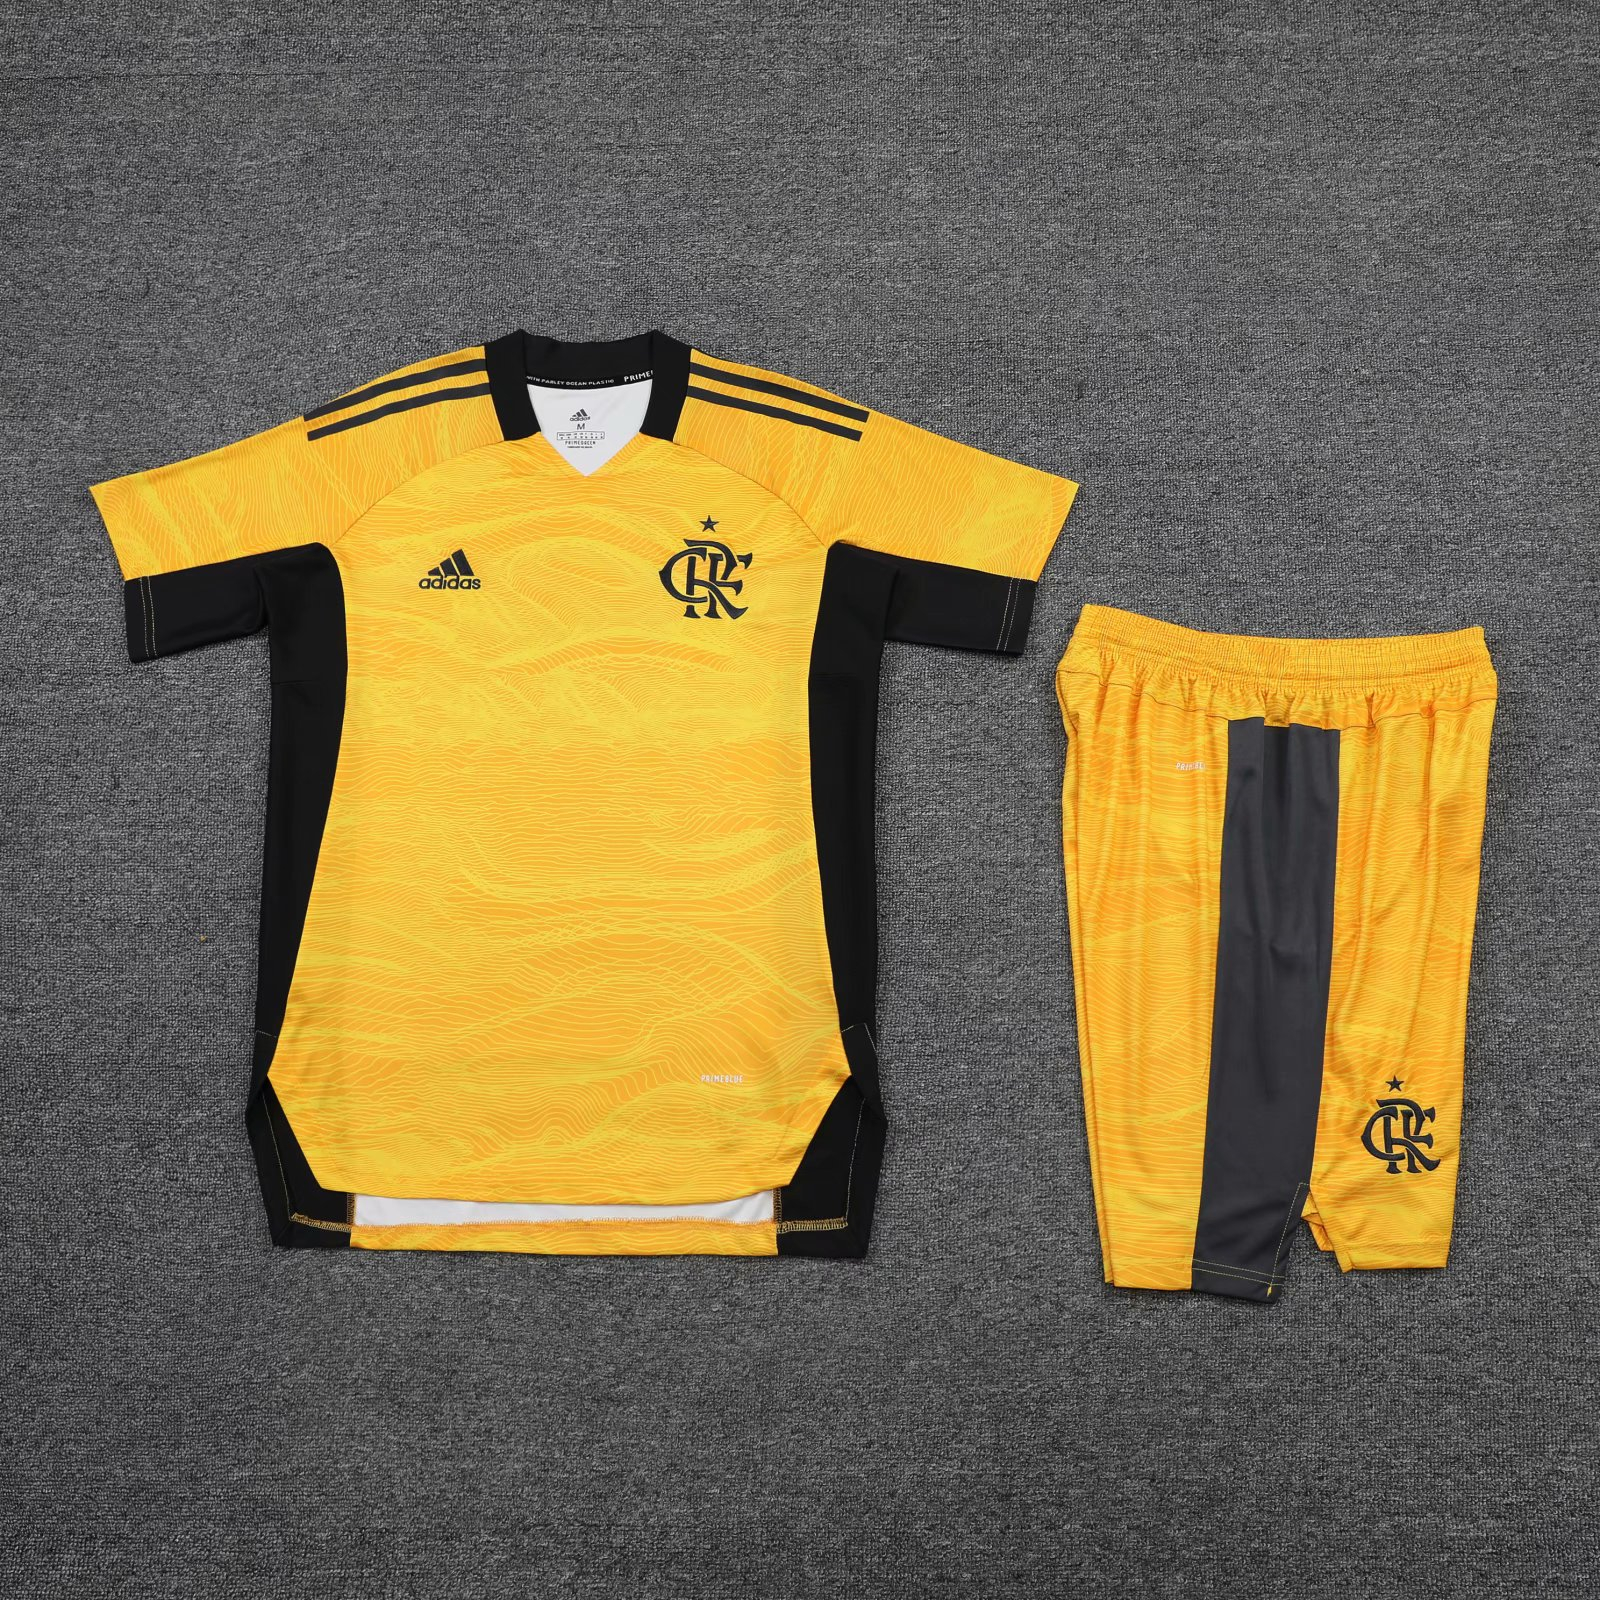 Flamengo Soccer Jersey + Short Replica Goalkeeper Yellow Mens 2021/22